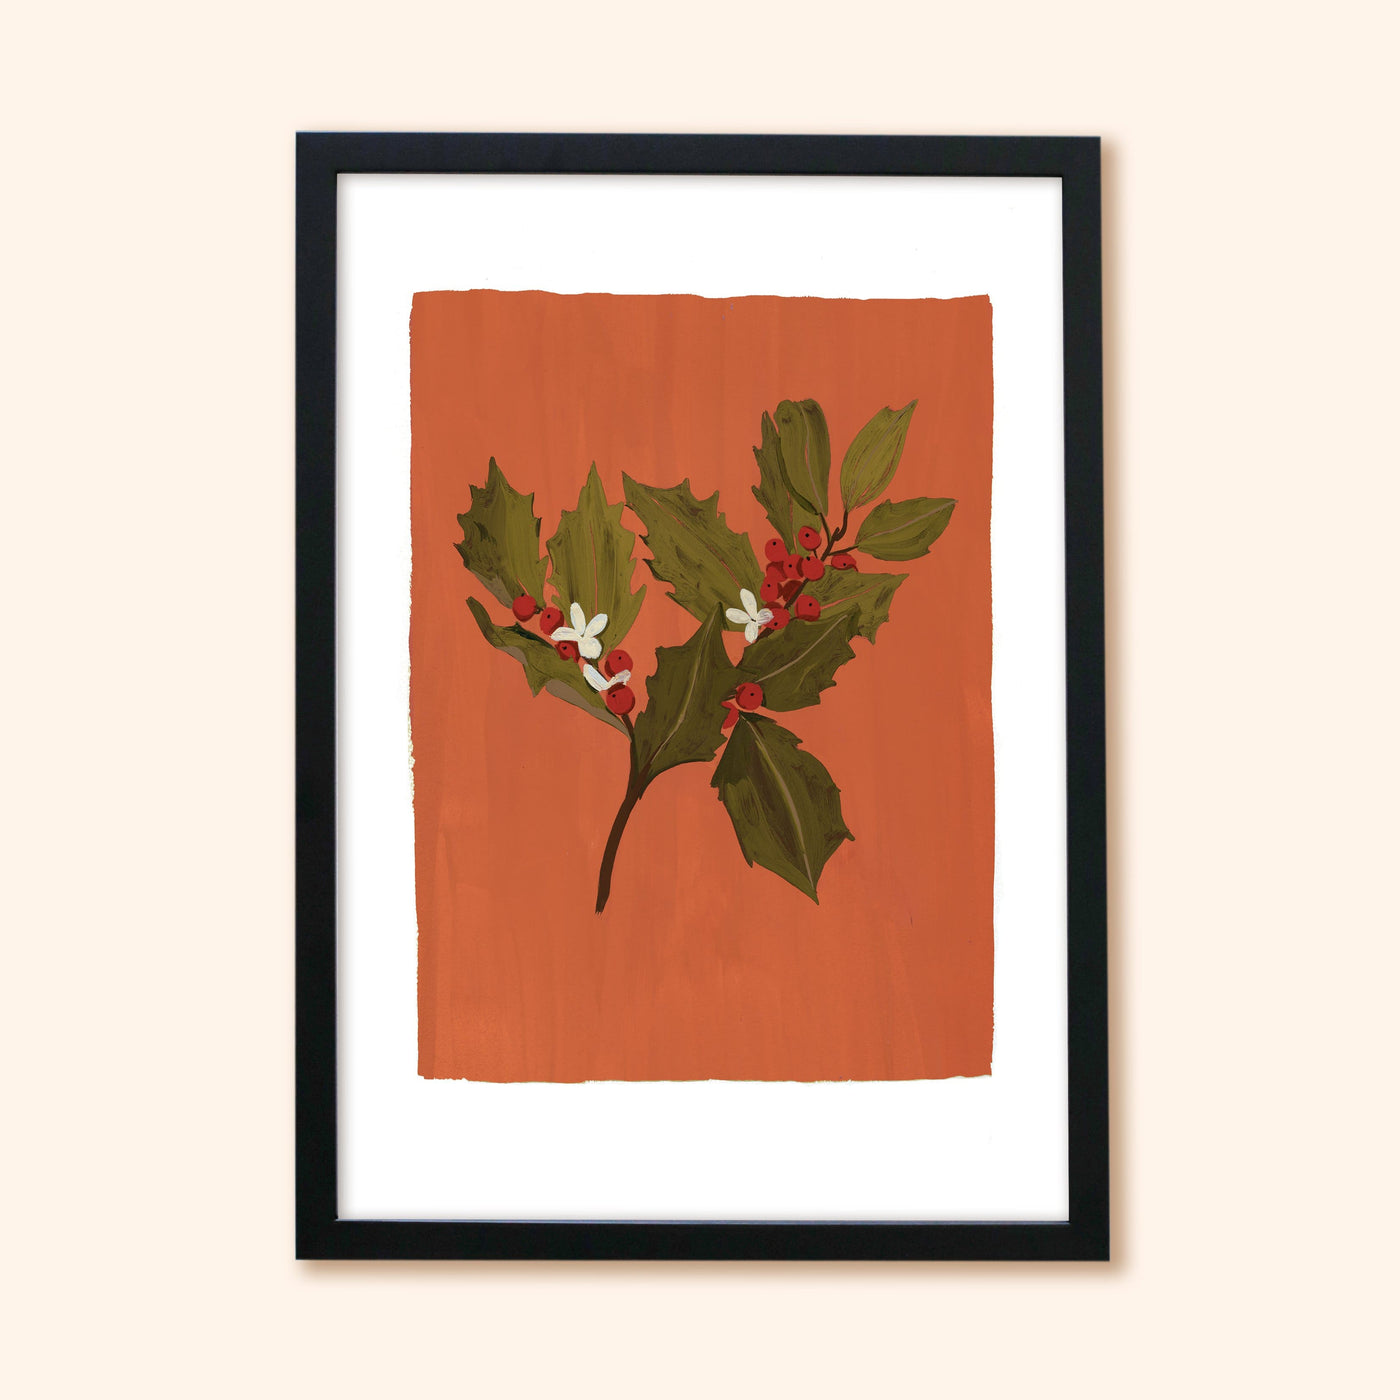 Botanical Illustration Of A Sprig Of Holy on A Warm Orange Background In A Black Frame - Annie Dornan Smith